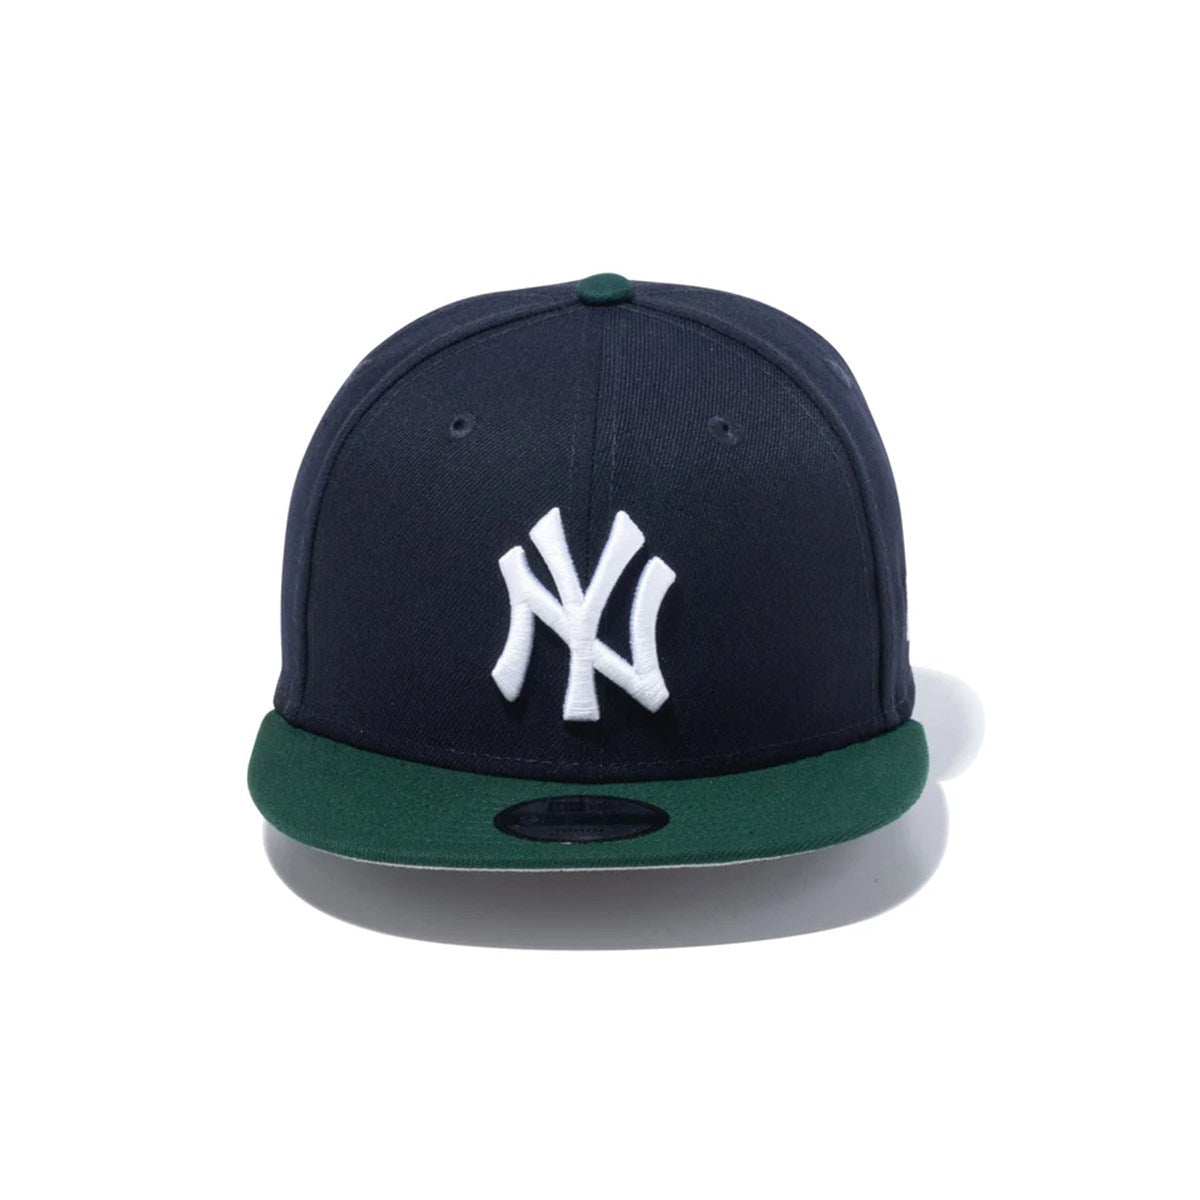 NEW ERA New York Yankees - YOUTH950 GORO NEYYAN NVY DGRN【14124628】